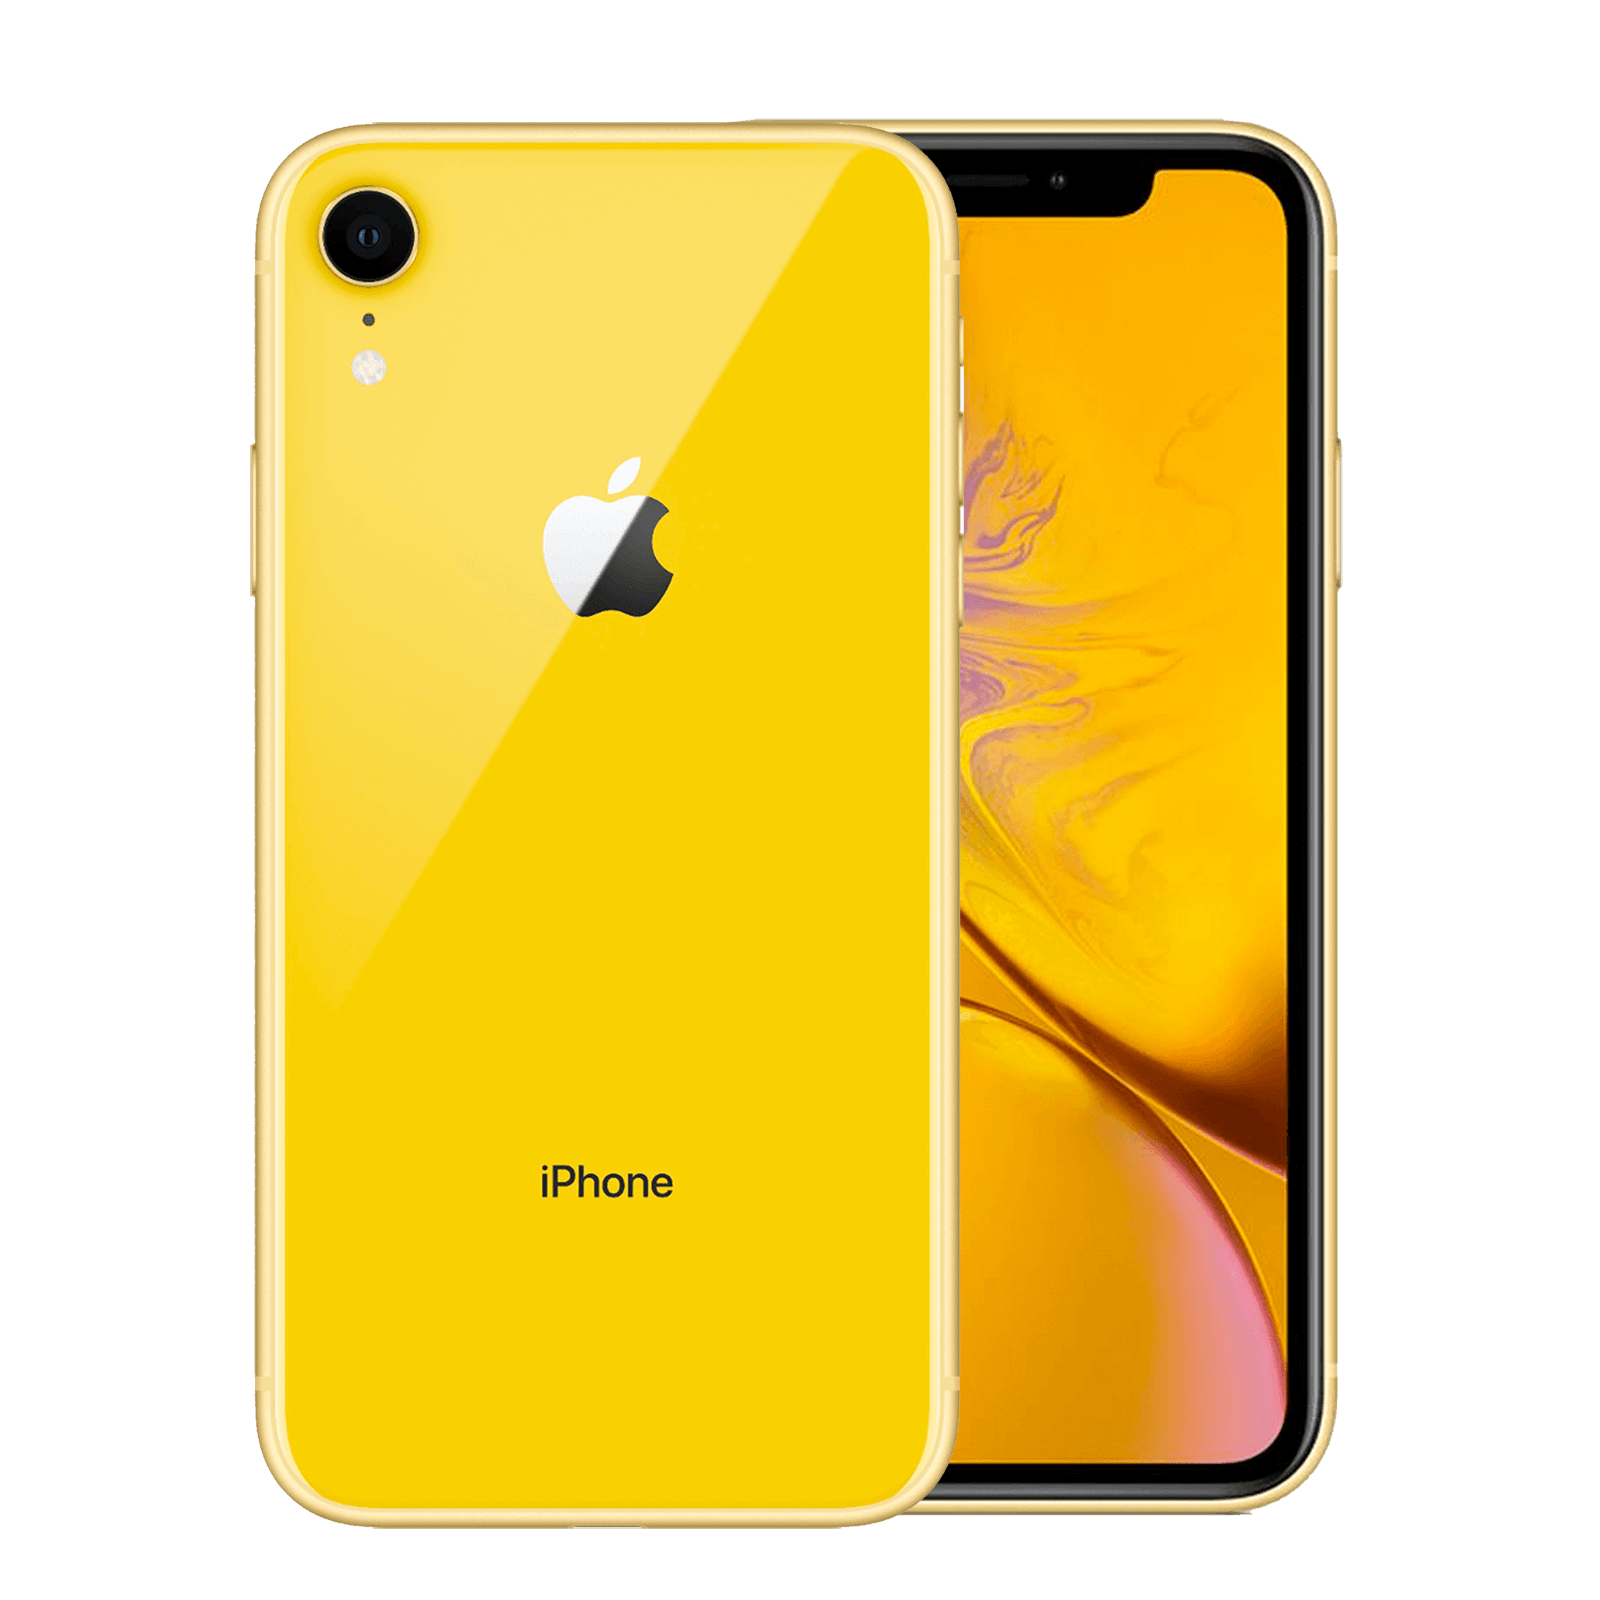 Apple iPhone XR 128GB Yellow Very Good - Unlocked